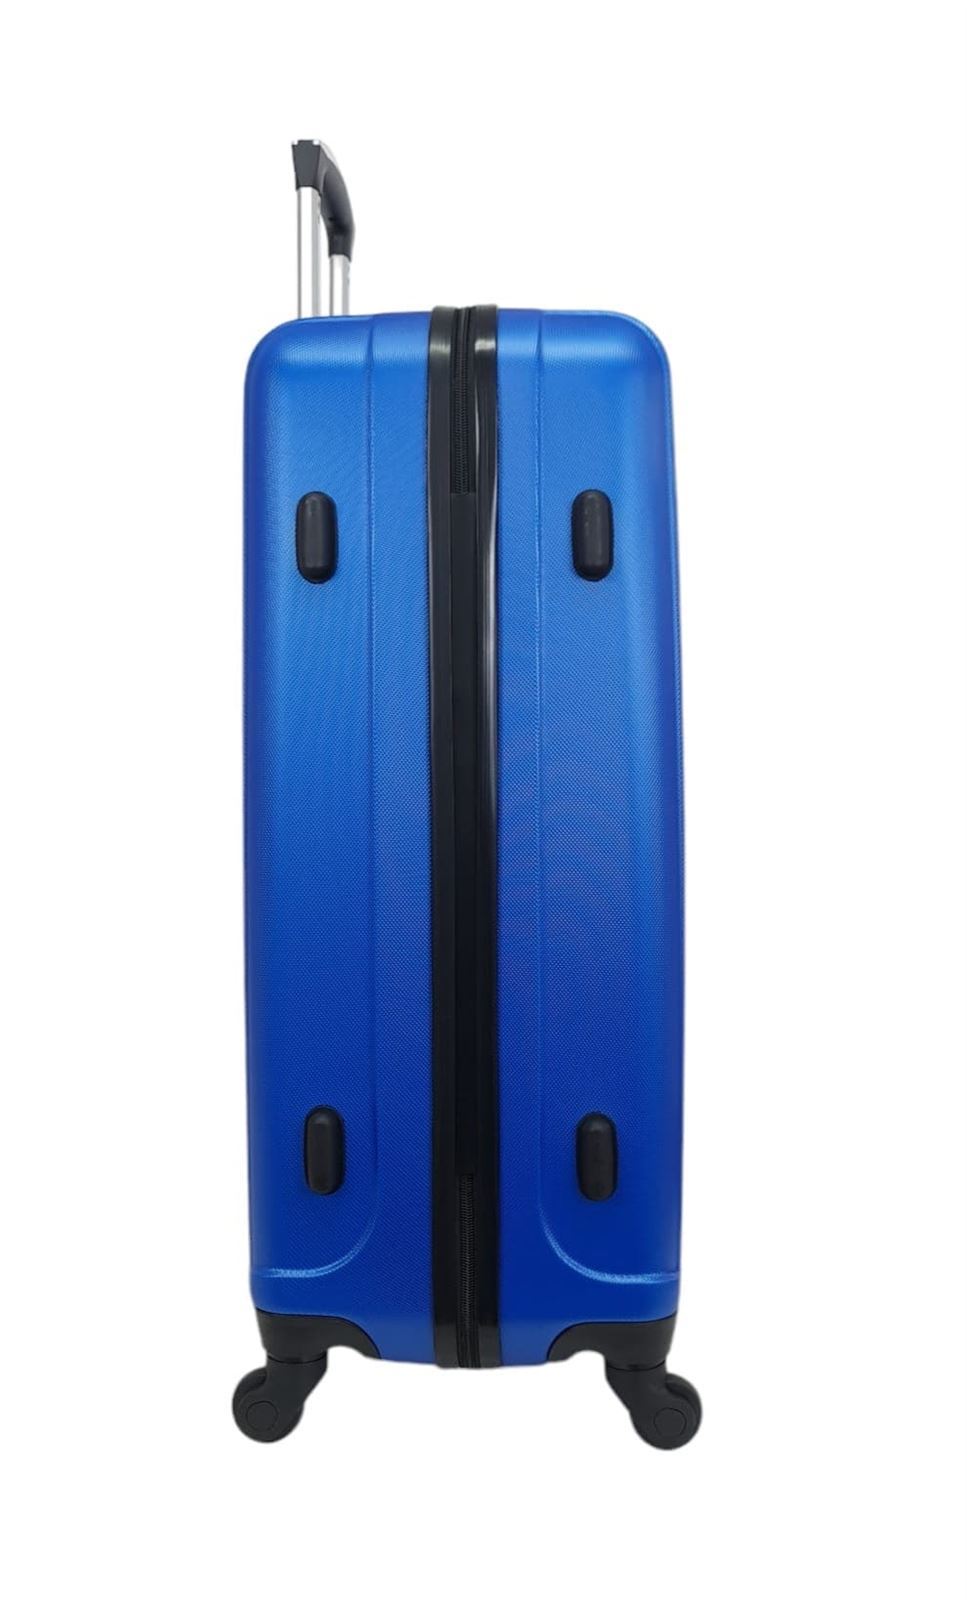 Maleta EXE Grande 75x44x29cms Ligera Barata Material ABS color Azul Eléctrico - Imagen 4